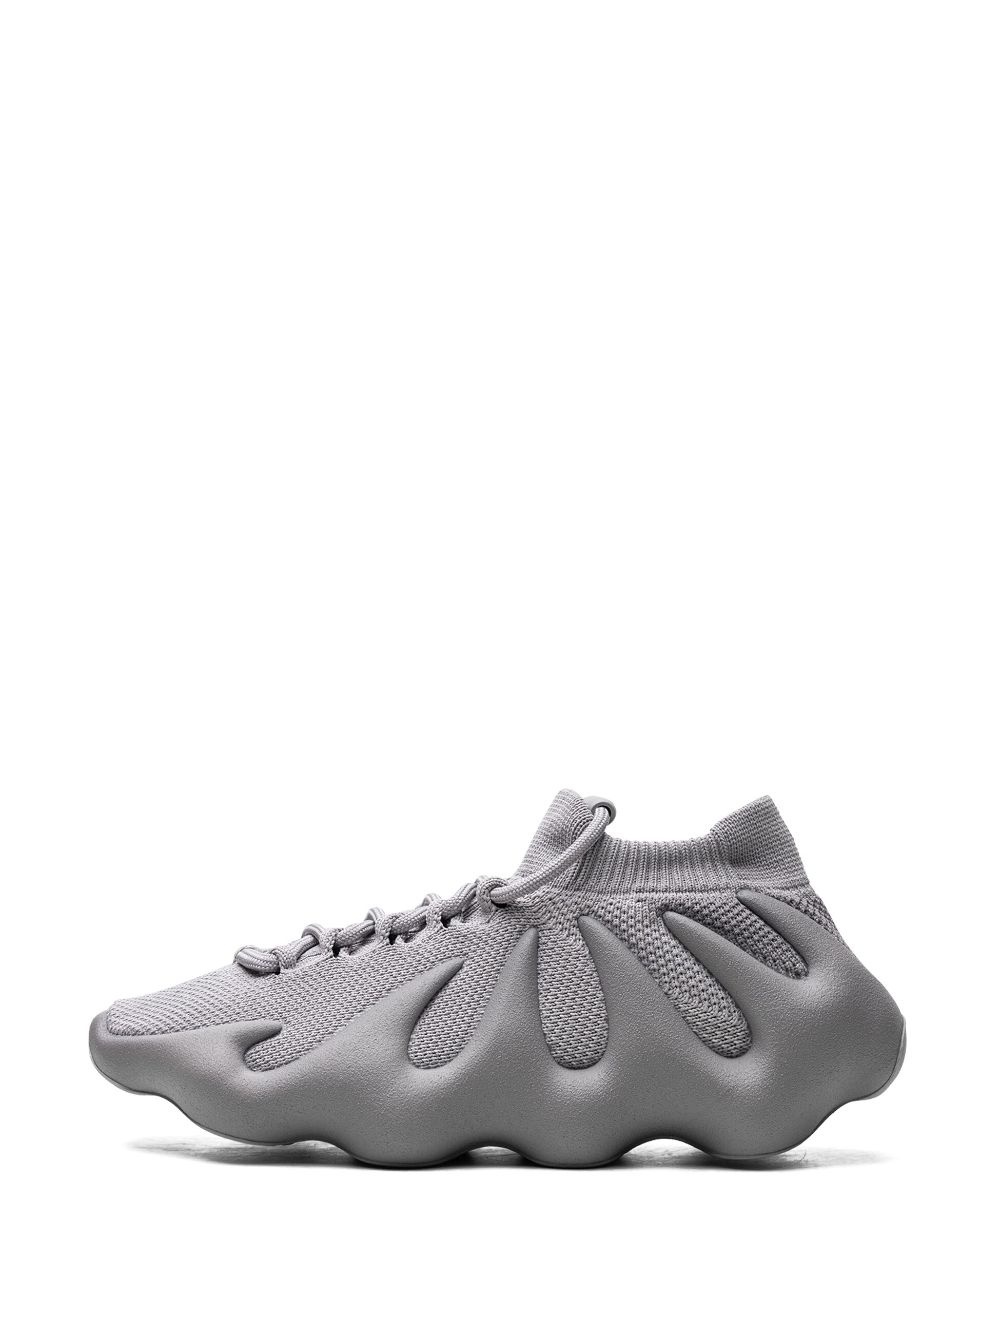 YEEZY 450 "Stone Grey" sneakers - 5